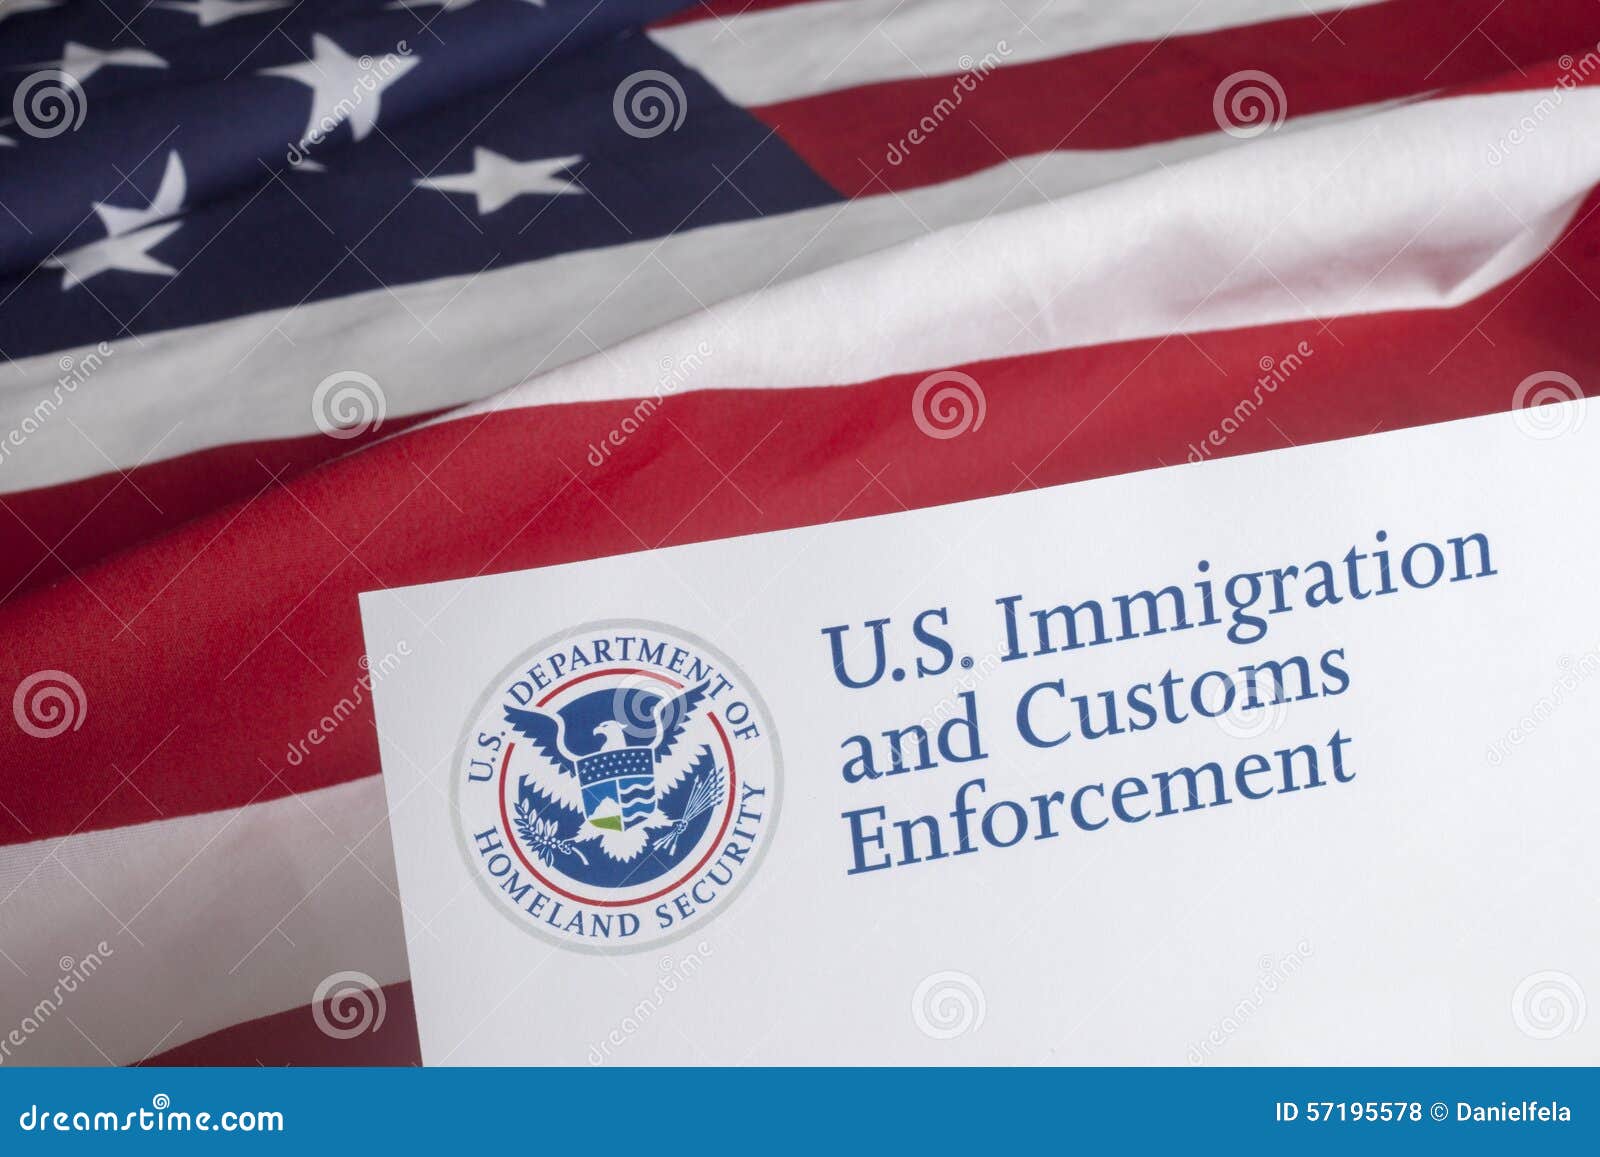 us customs and border enforcement